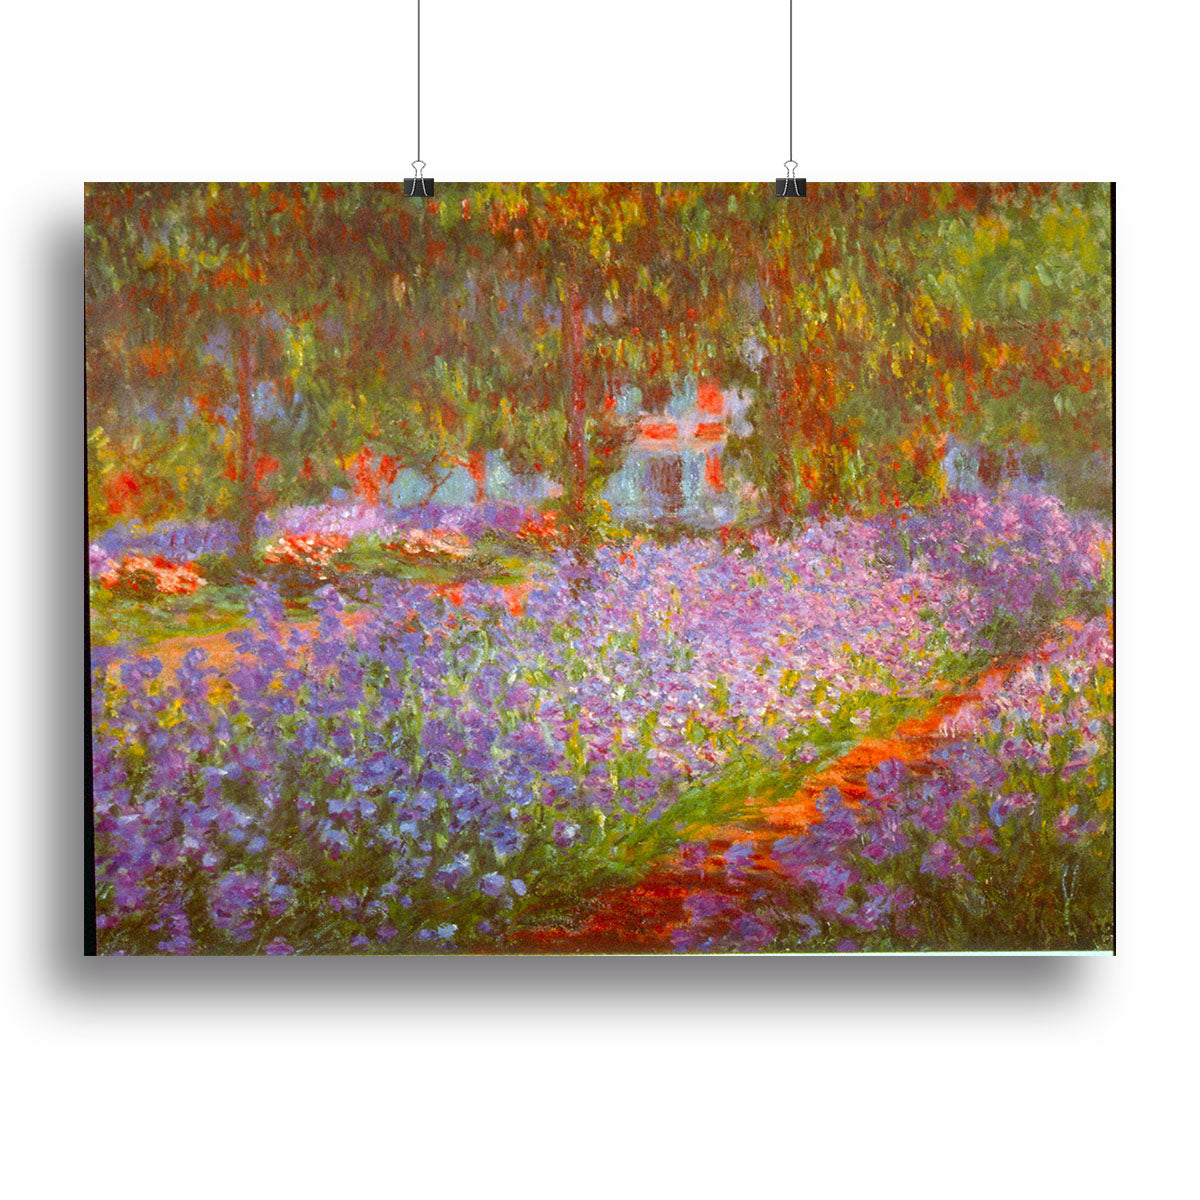 Monet's Garden by Monet Canvas Print or Poster - Canvas Art Rocks - 2